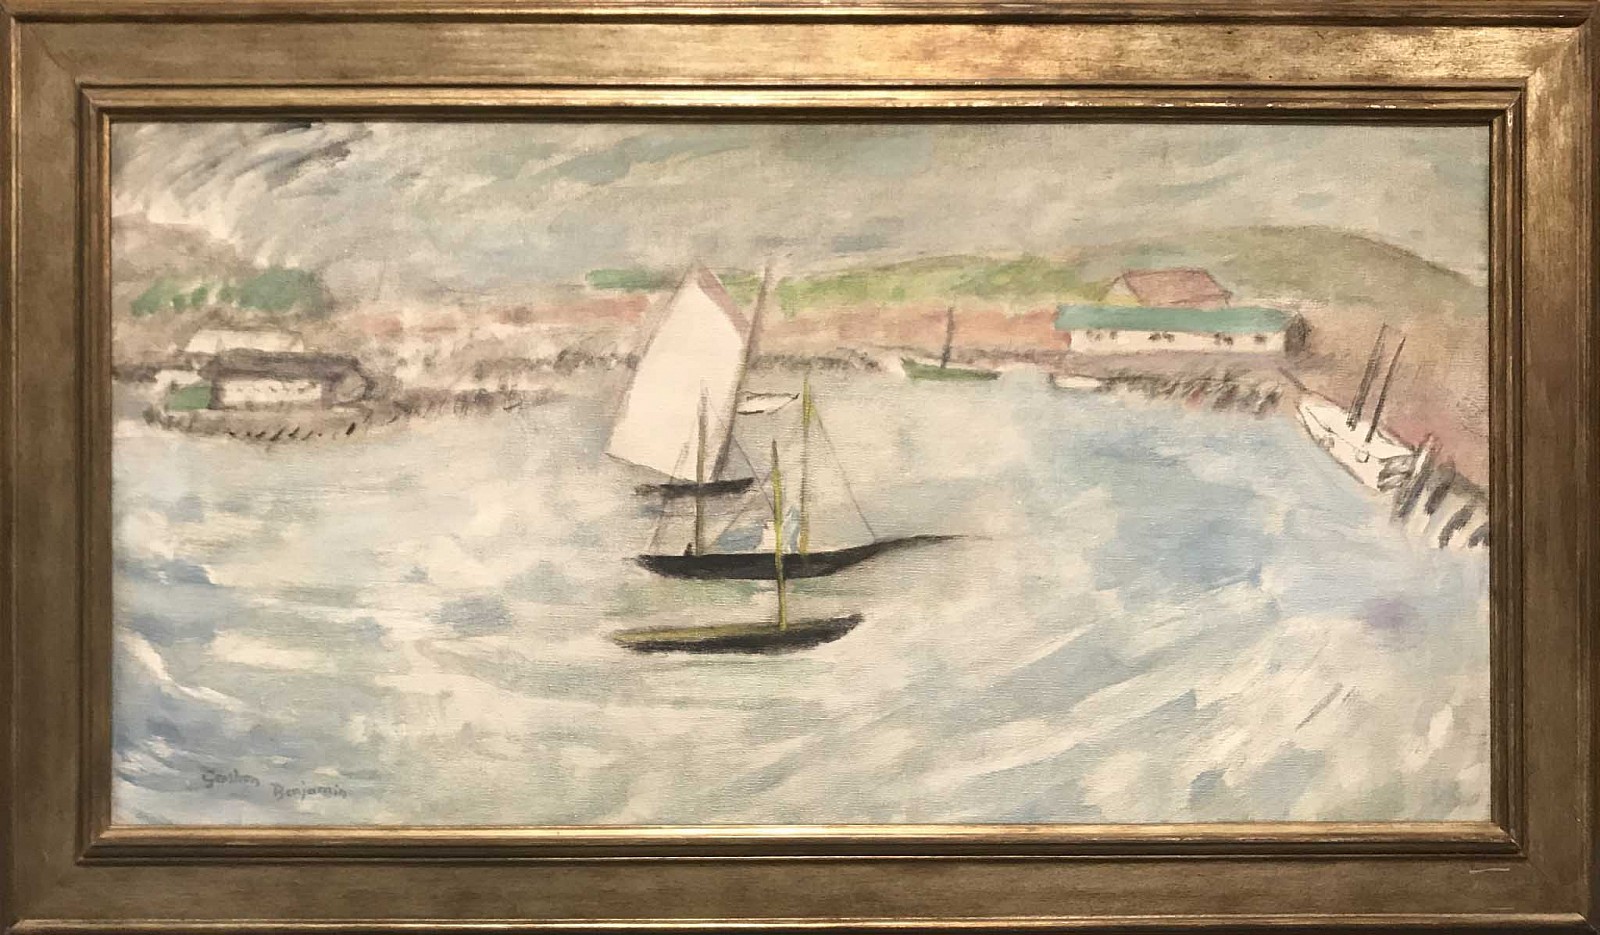 Gershon Benjamin, Gloucester Harbor #3, 1930 ca
oil on canvas, 17 x 34 in. (43.2 x 86.4 cm)
GB1803021